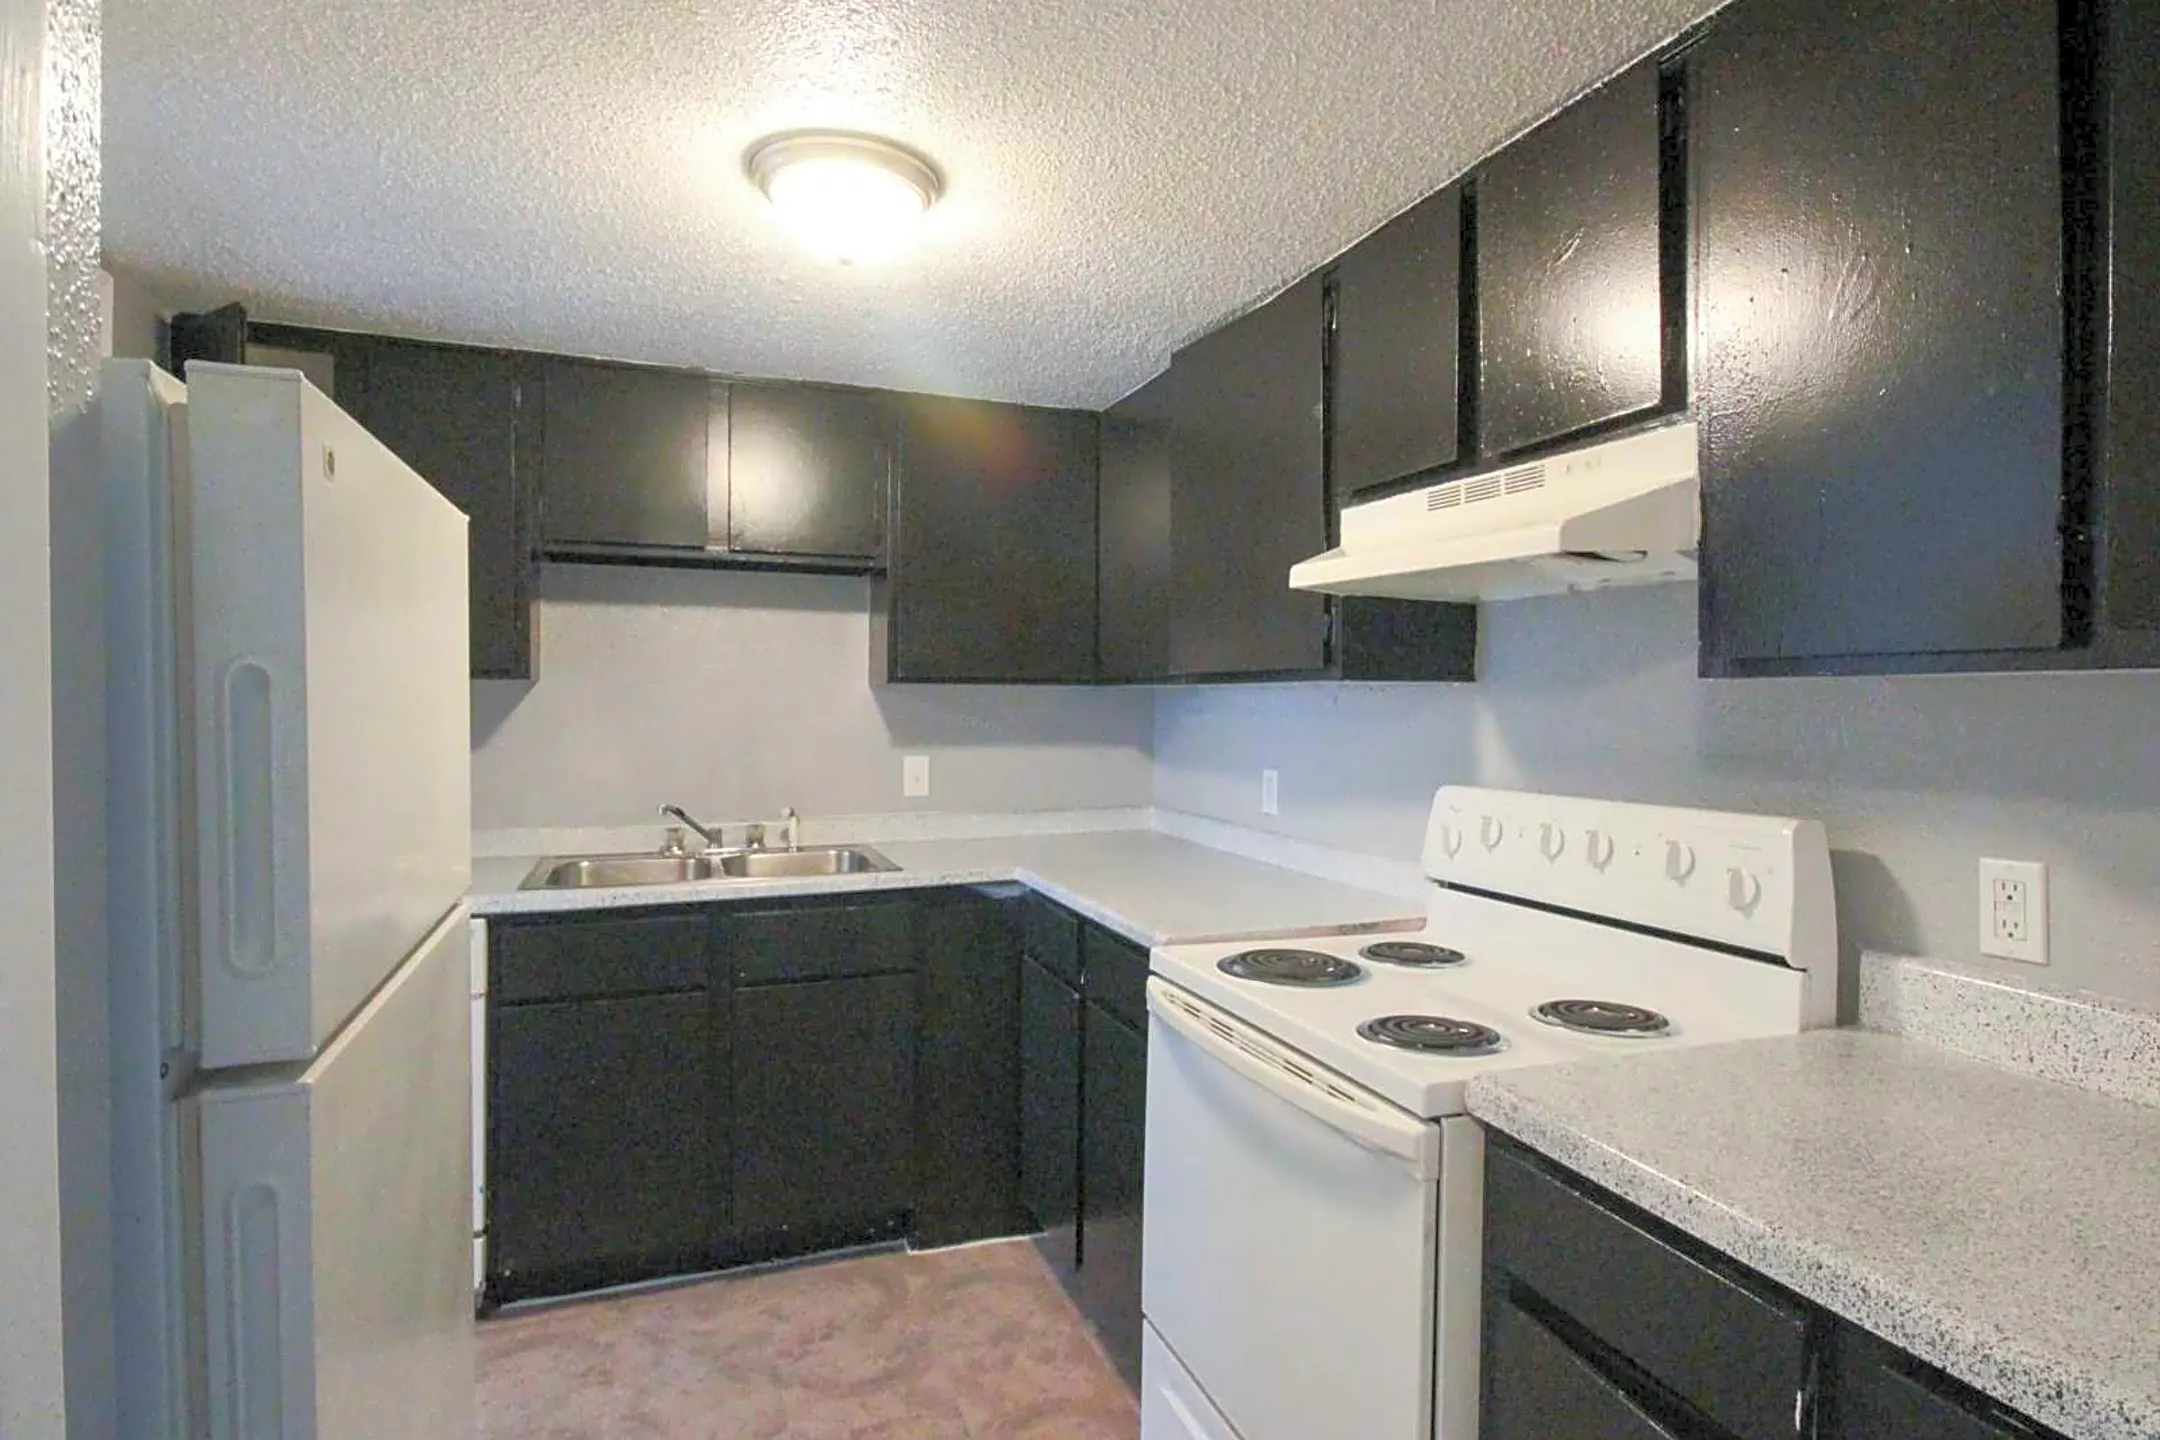 Kitchen - Port Arthur Park Apartments - Port Arthur, TX